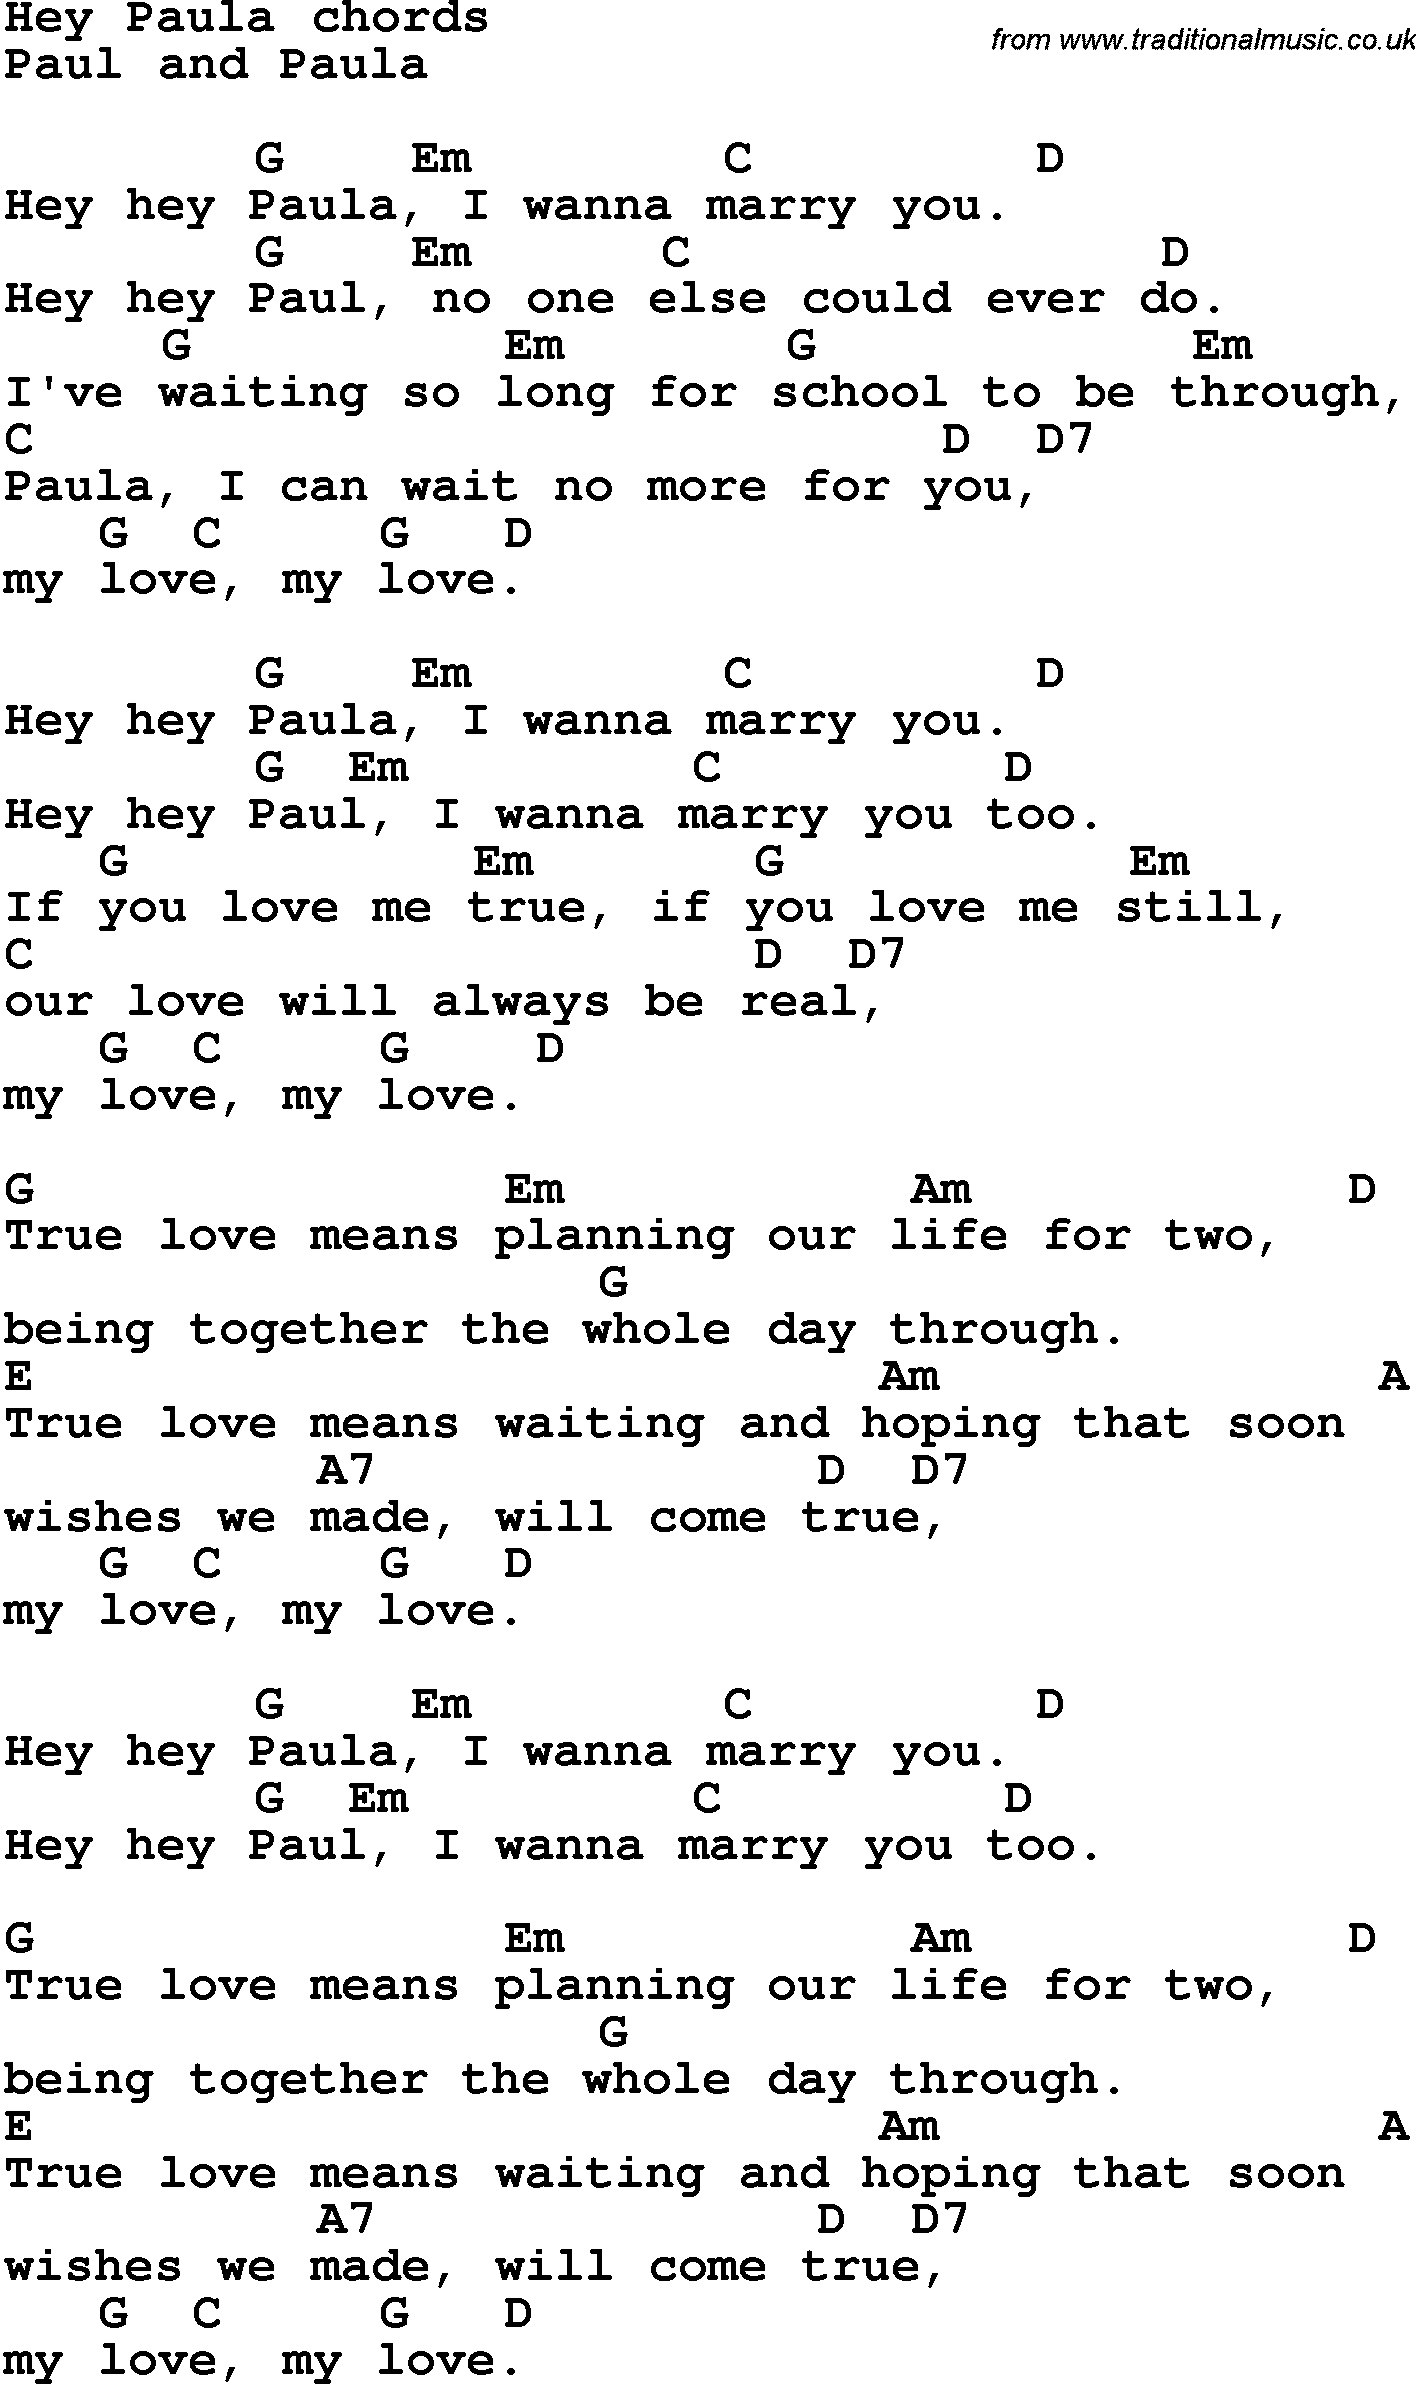 Song Lyrics with guitar chords for Hey Paula